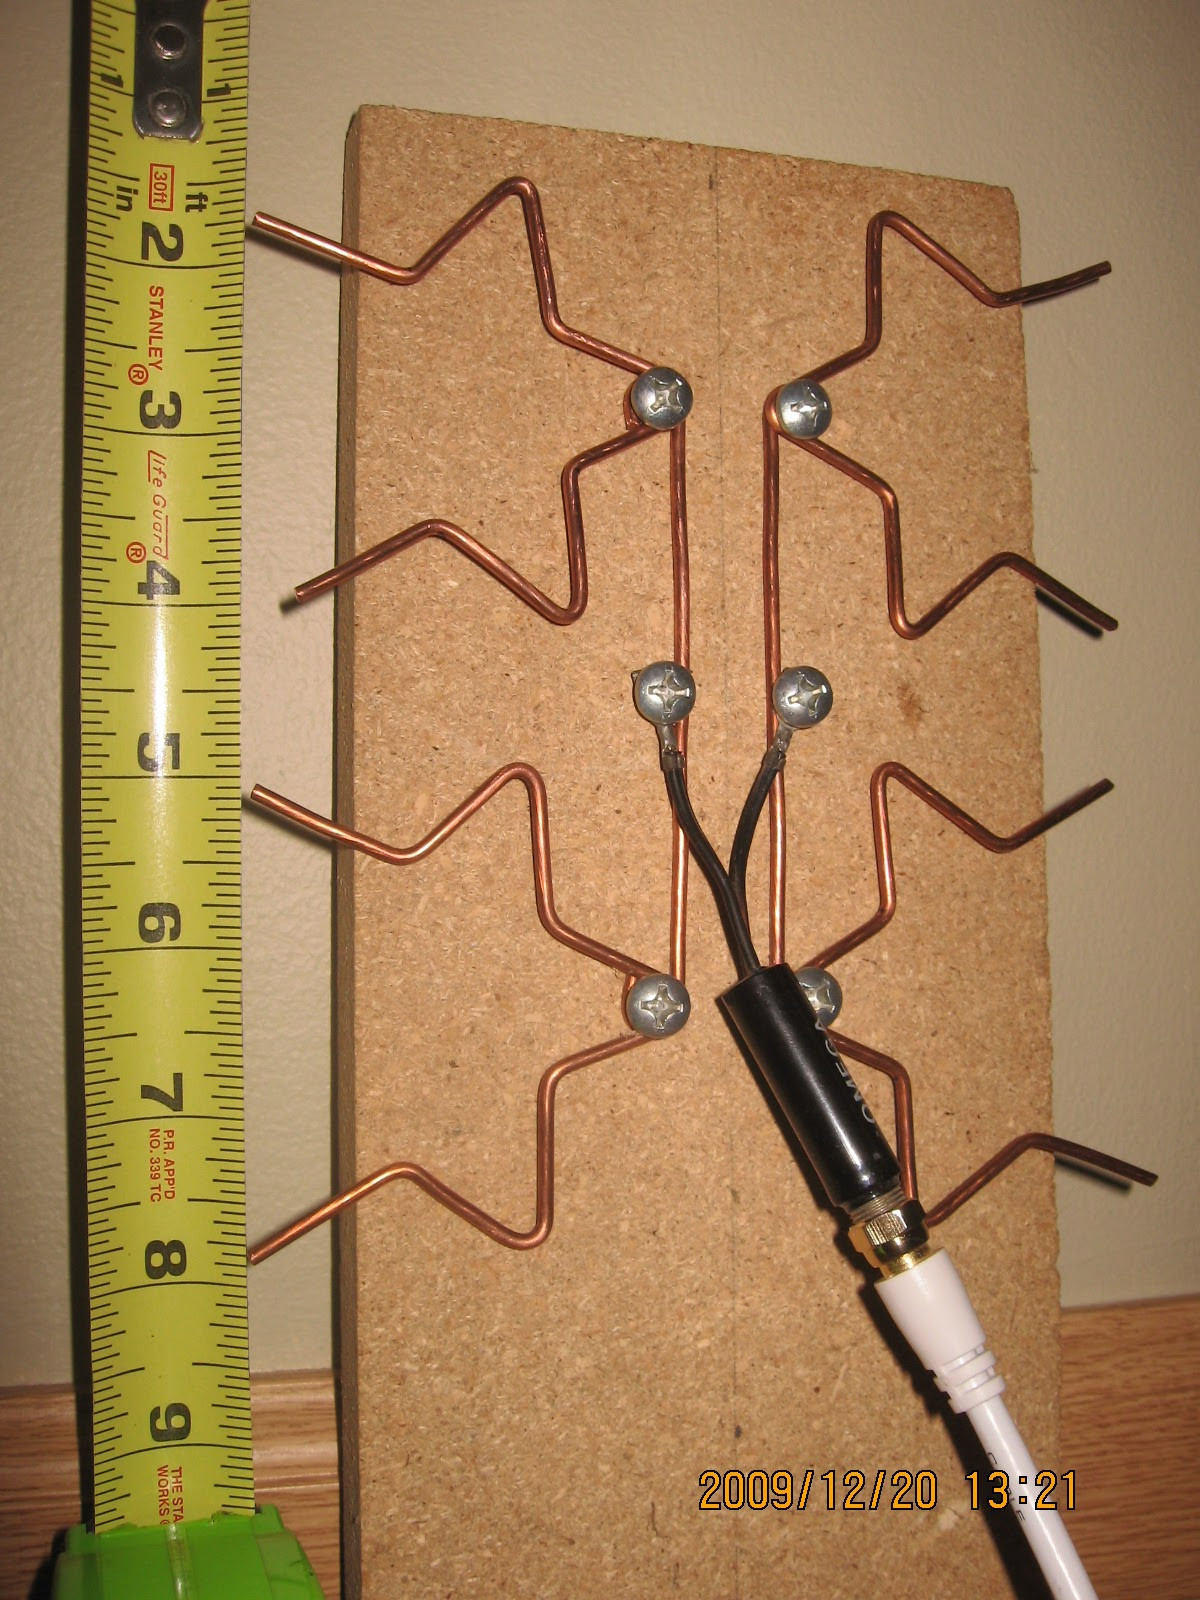 Best ideas about DIY Ota Antenna
. Save or Pin DIY Fractal Antenna Mayhem Creations Now.